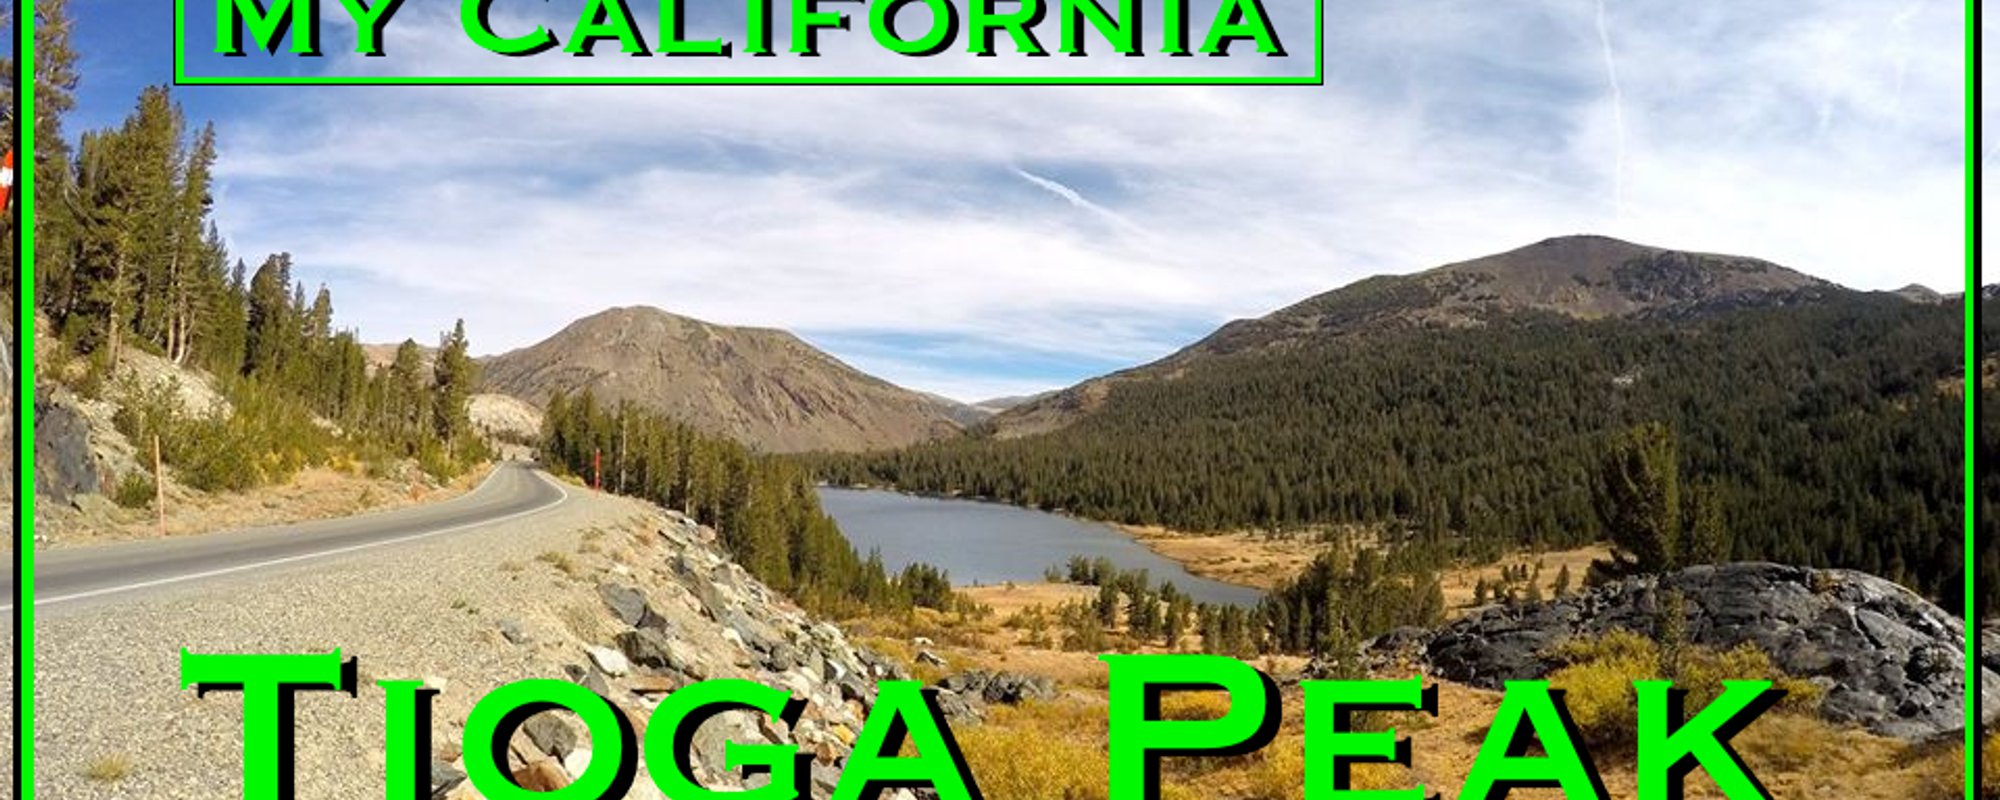 California Mountain Adventures - Tioga Peak